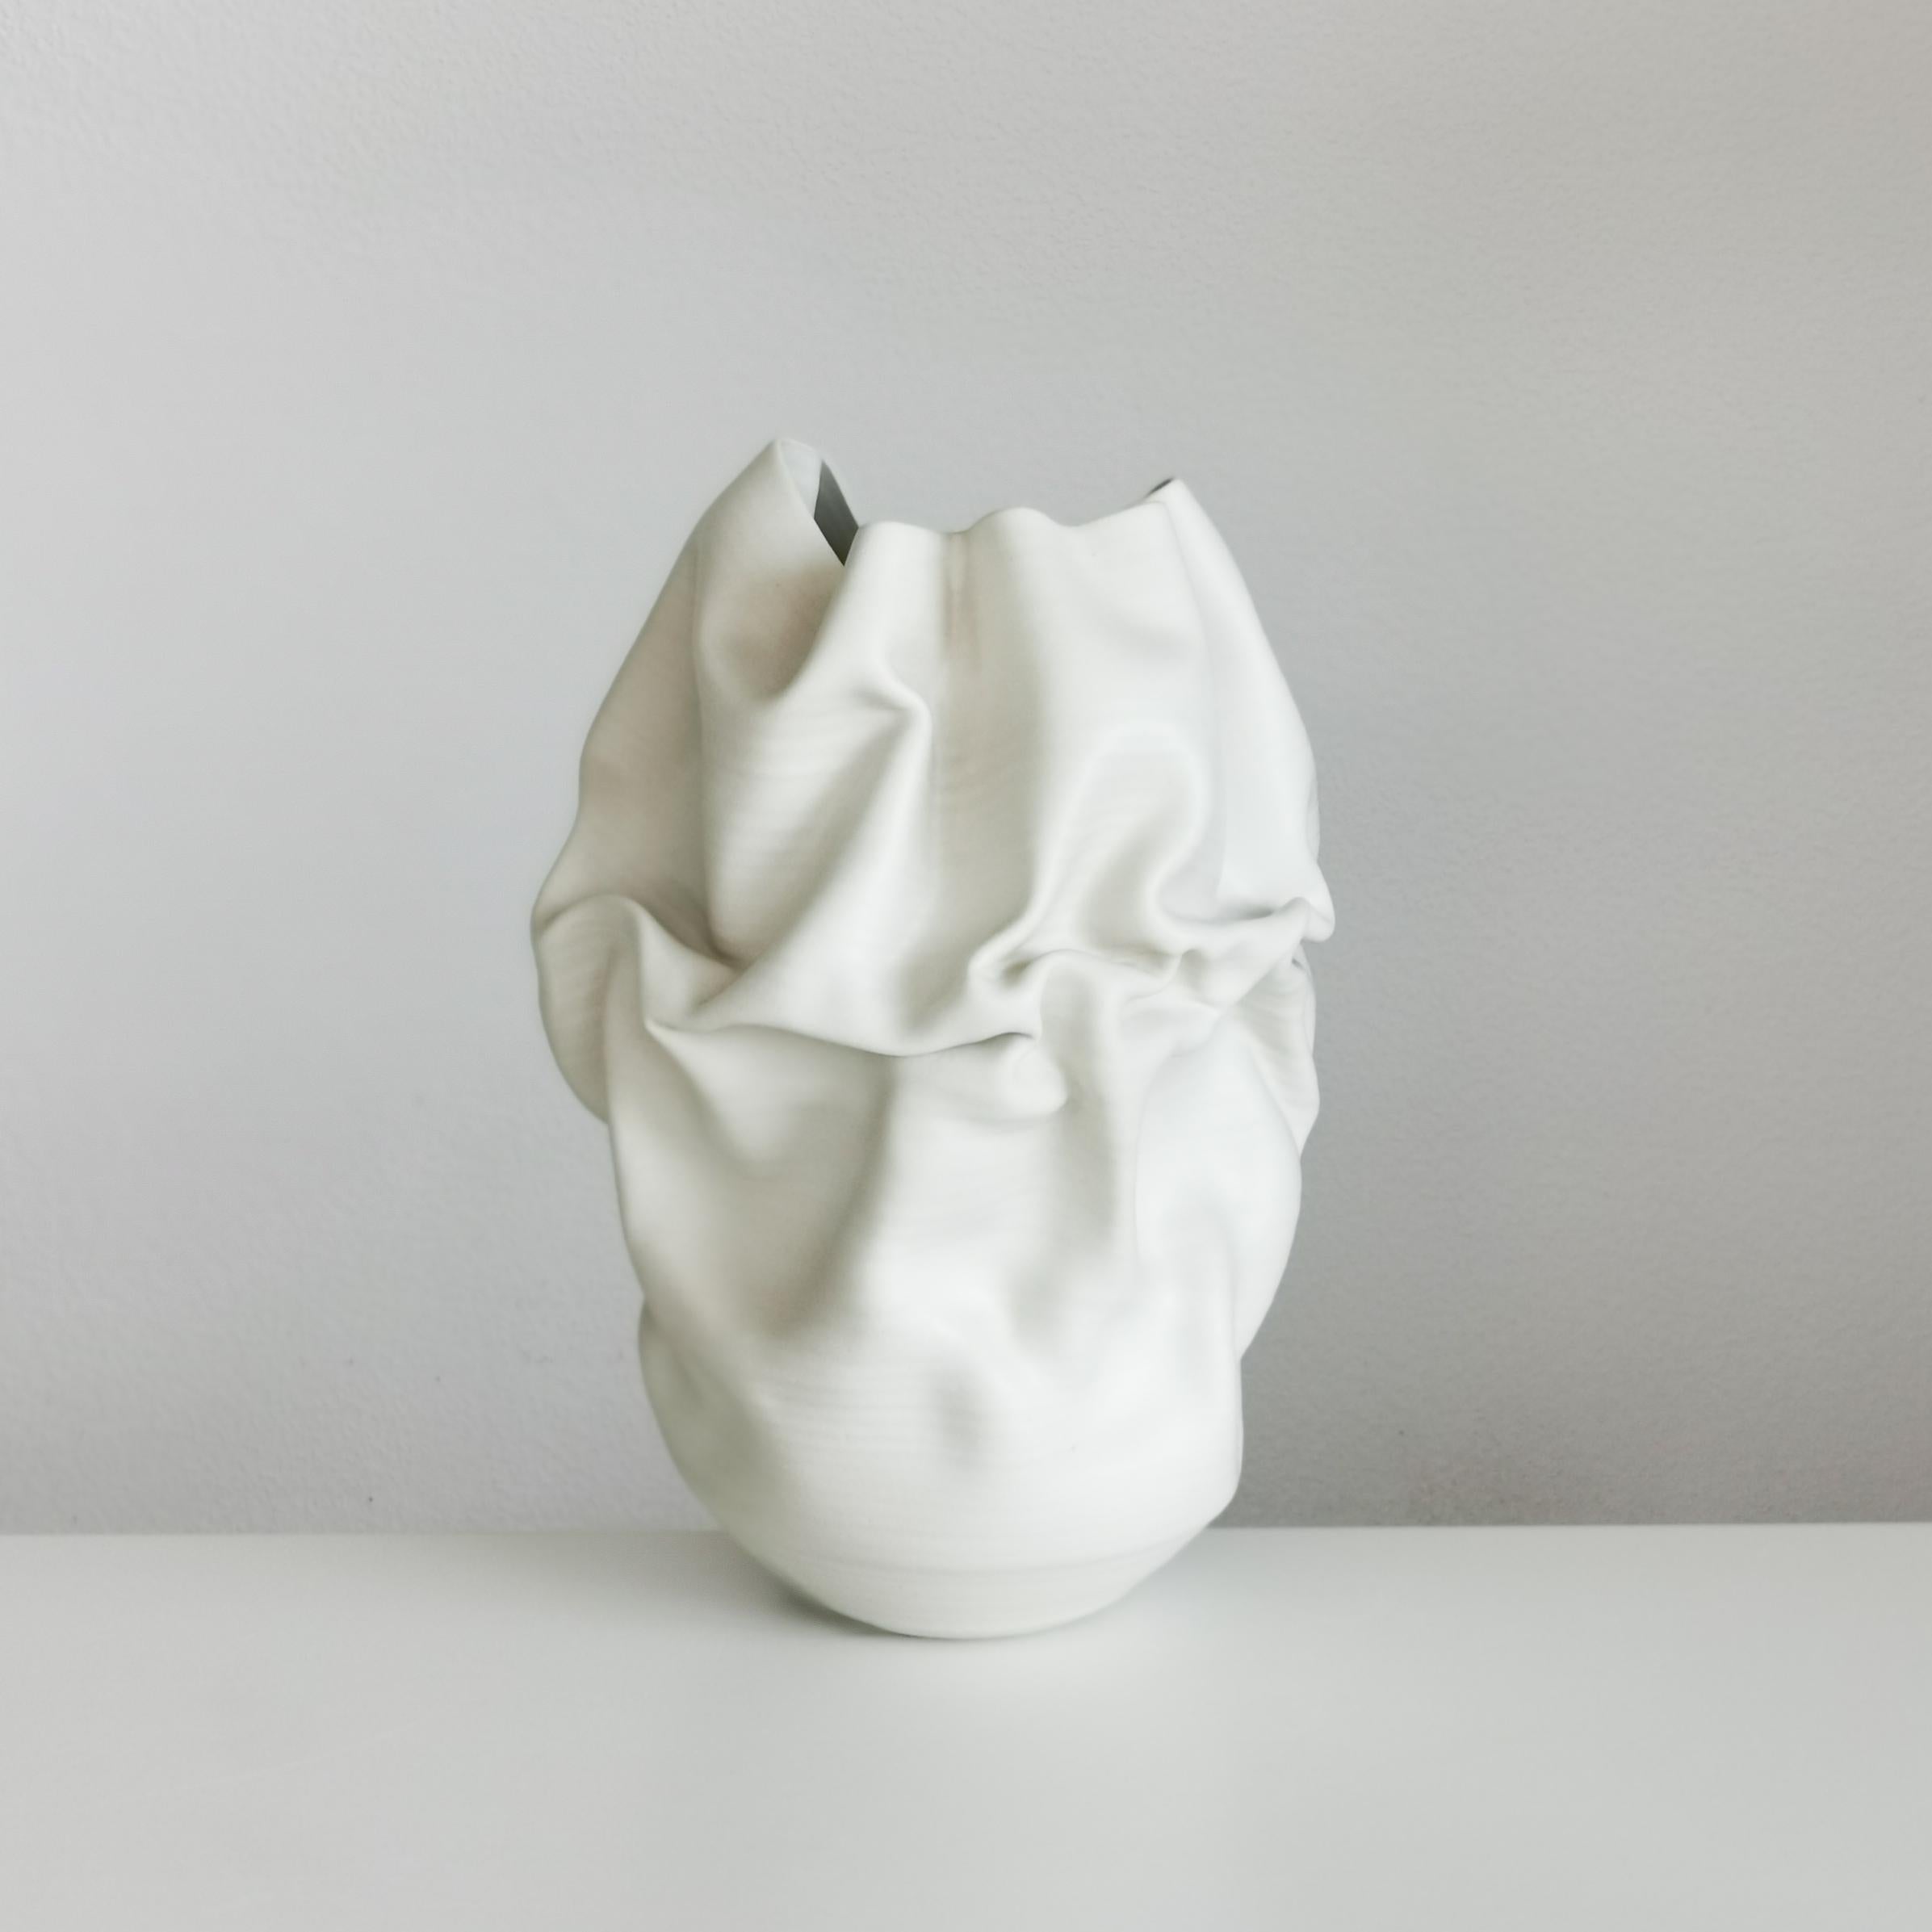 Organic Modern Medium Tall White Undulating Crumpled Form, Unique Ceramic Sculpture Vessel N.51